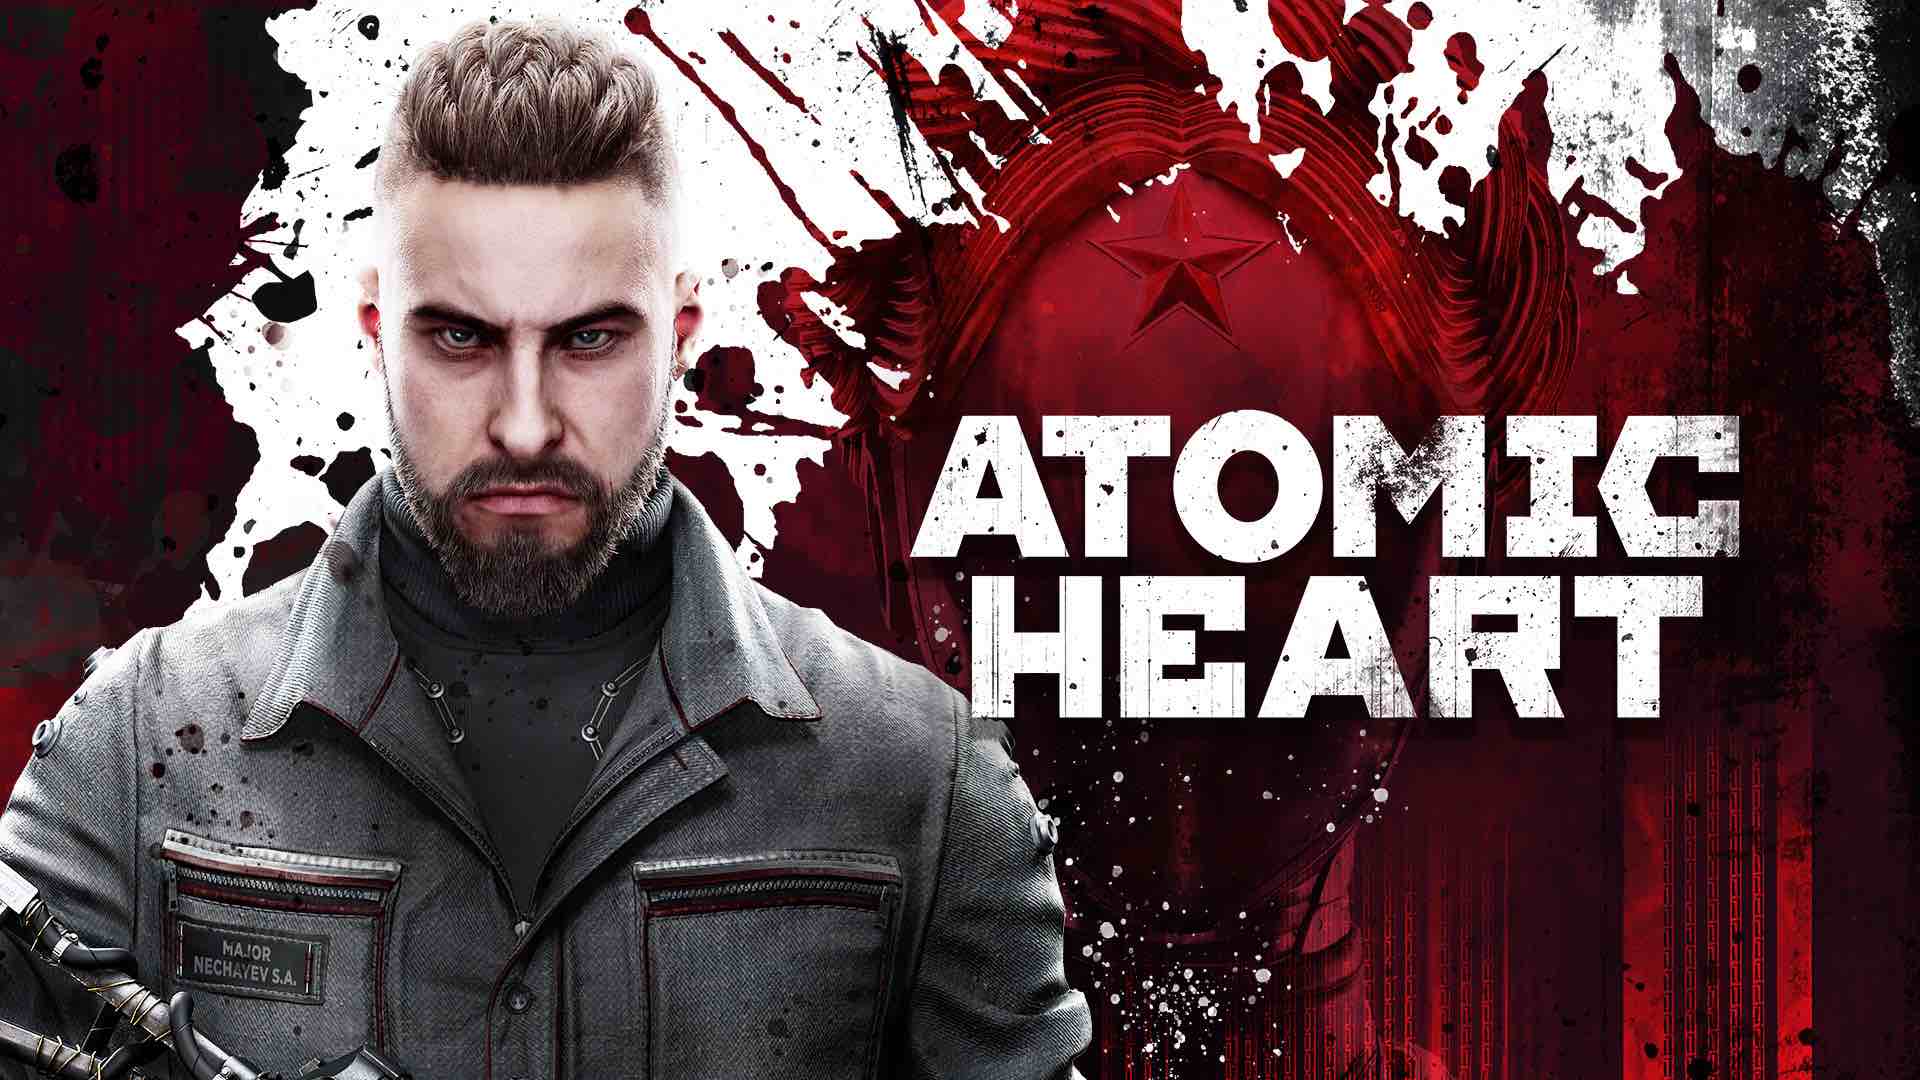 Focus Entertainment confirms that Atomic Heart has been a success